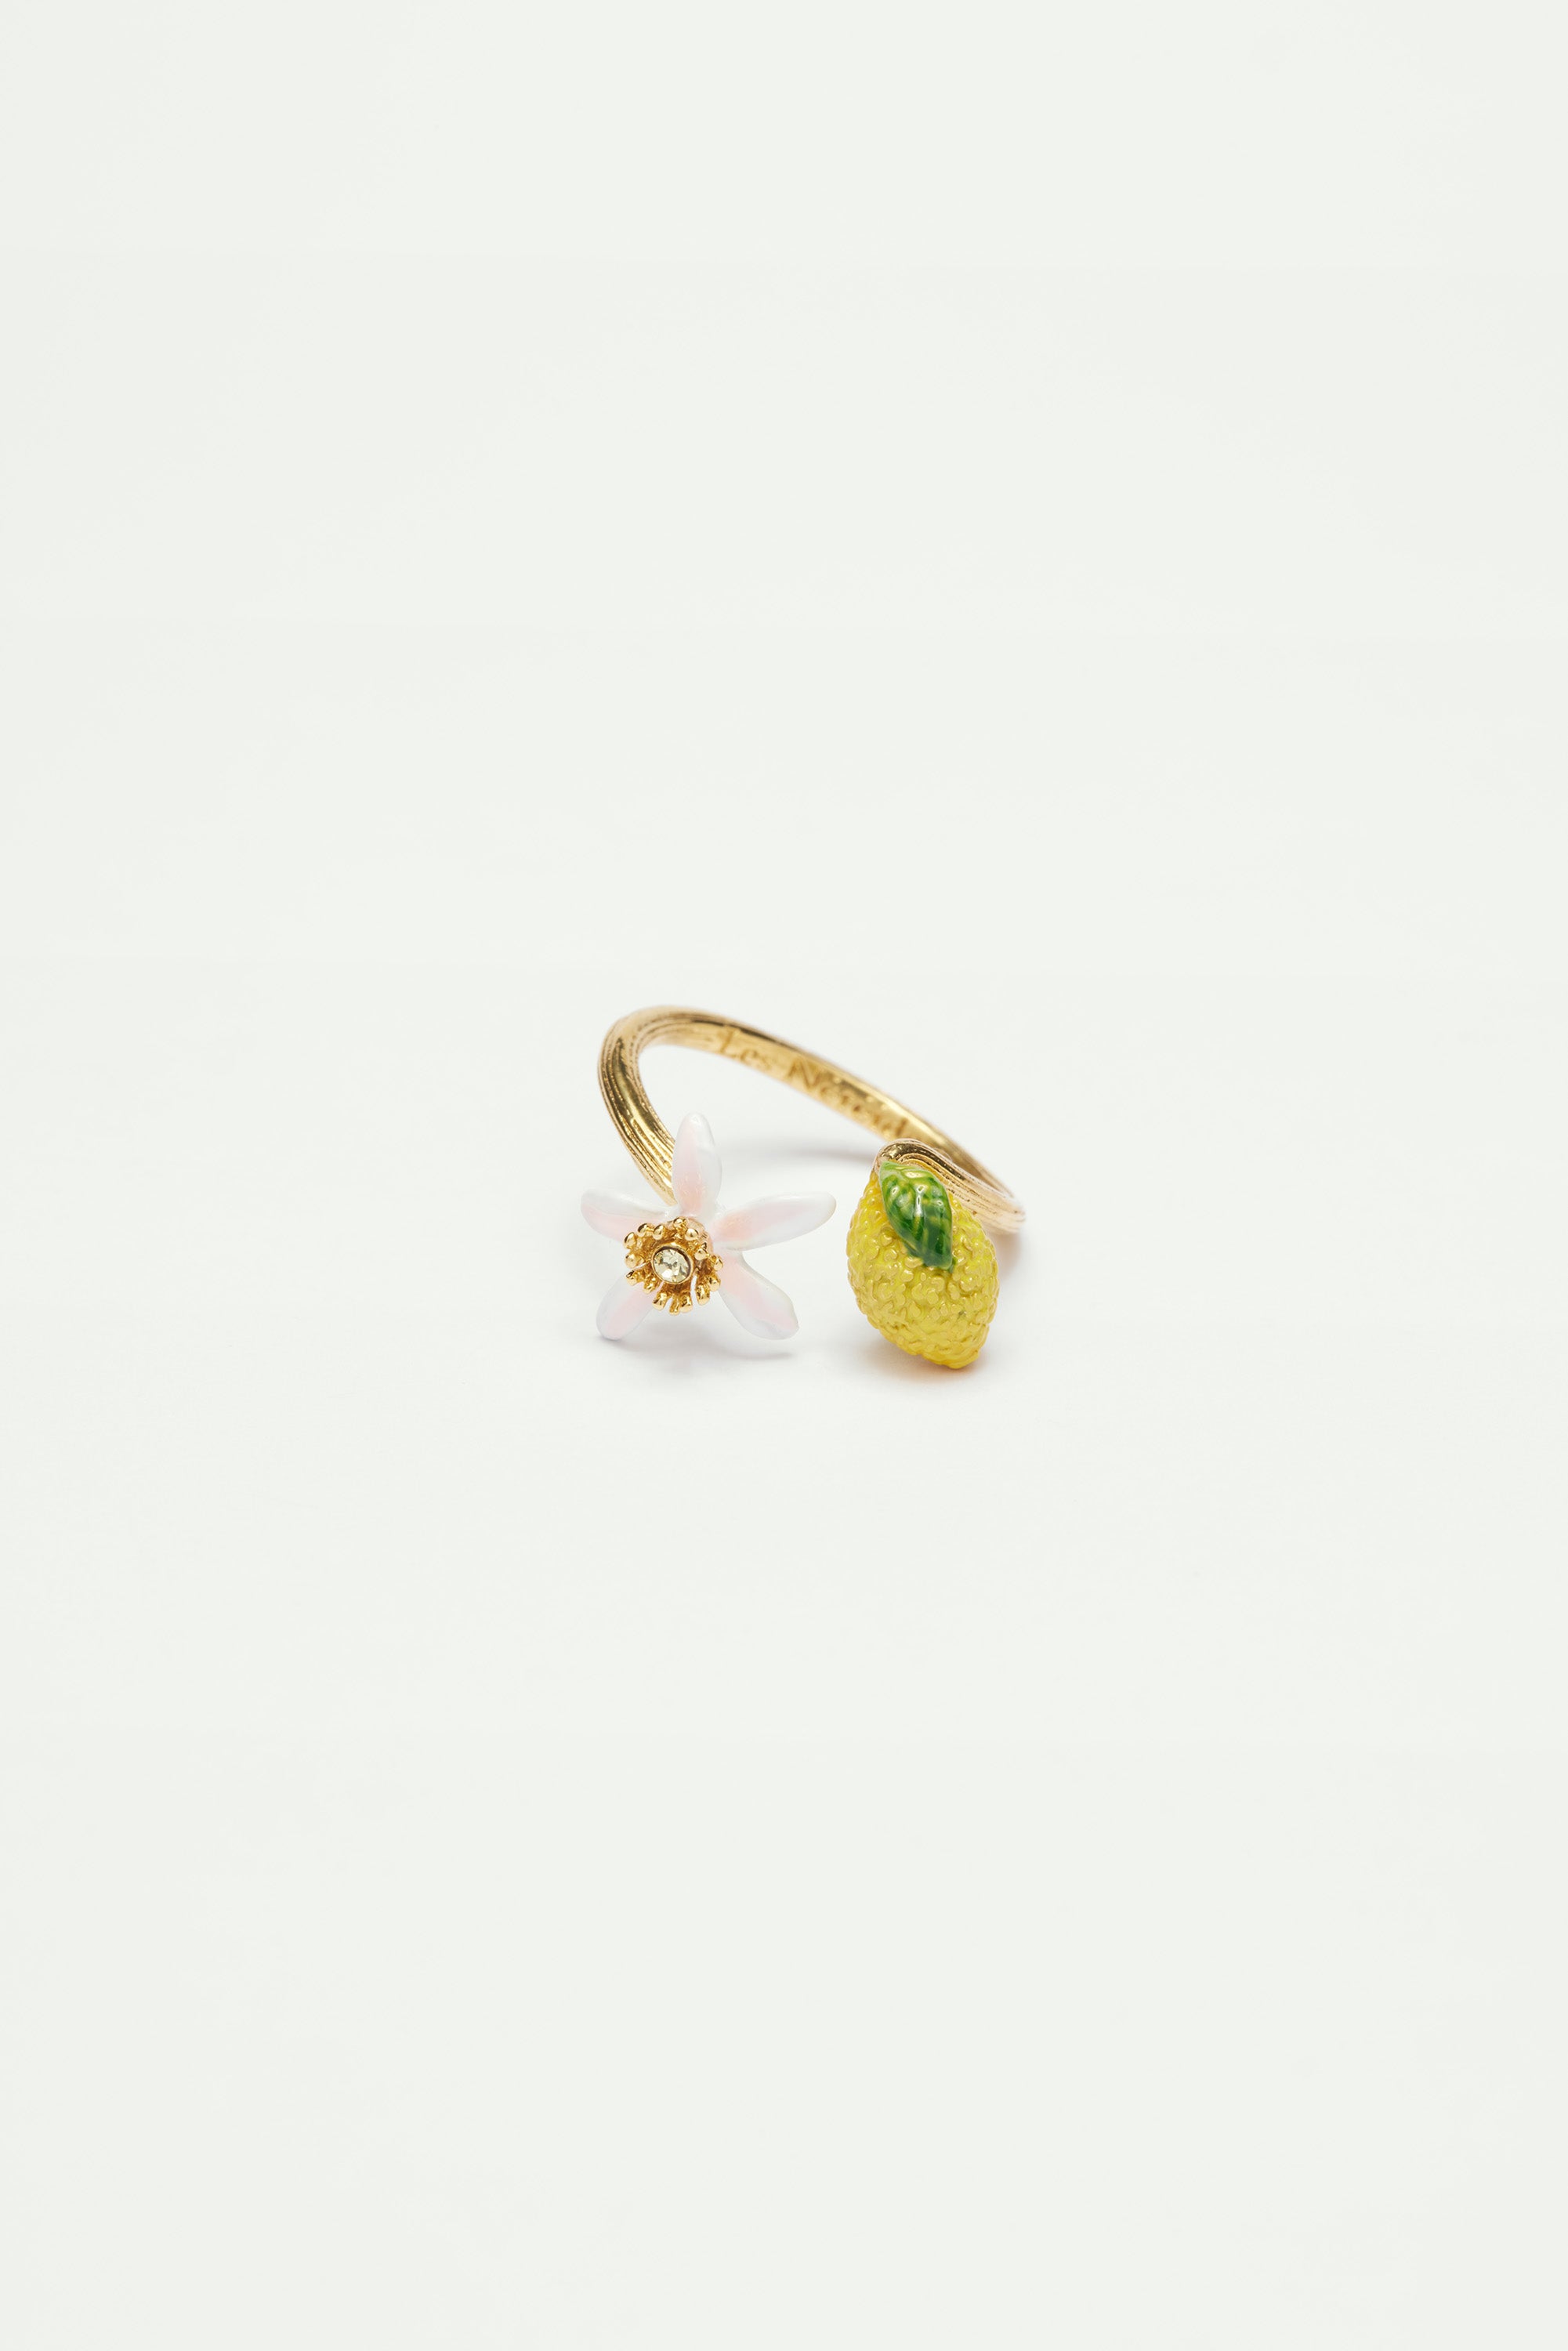 Lemon and lemon blossom adjustable ring